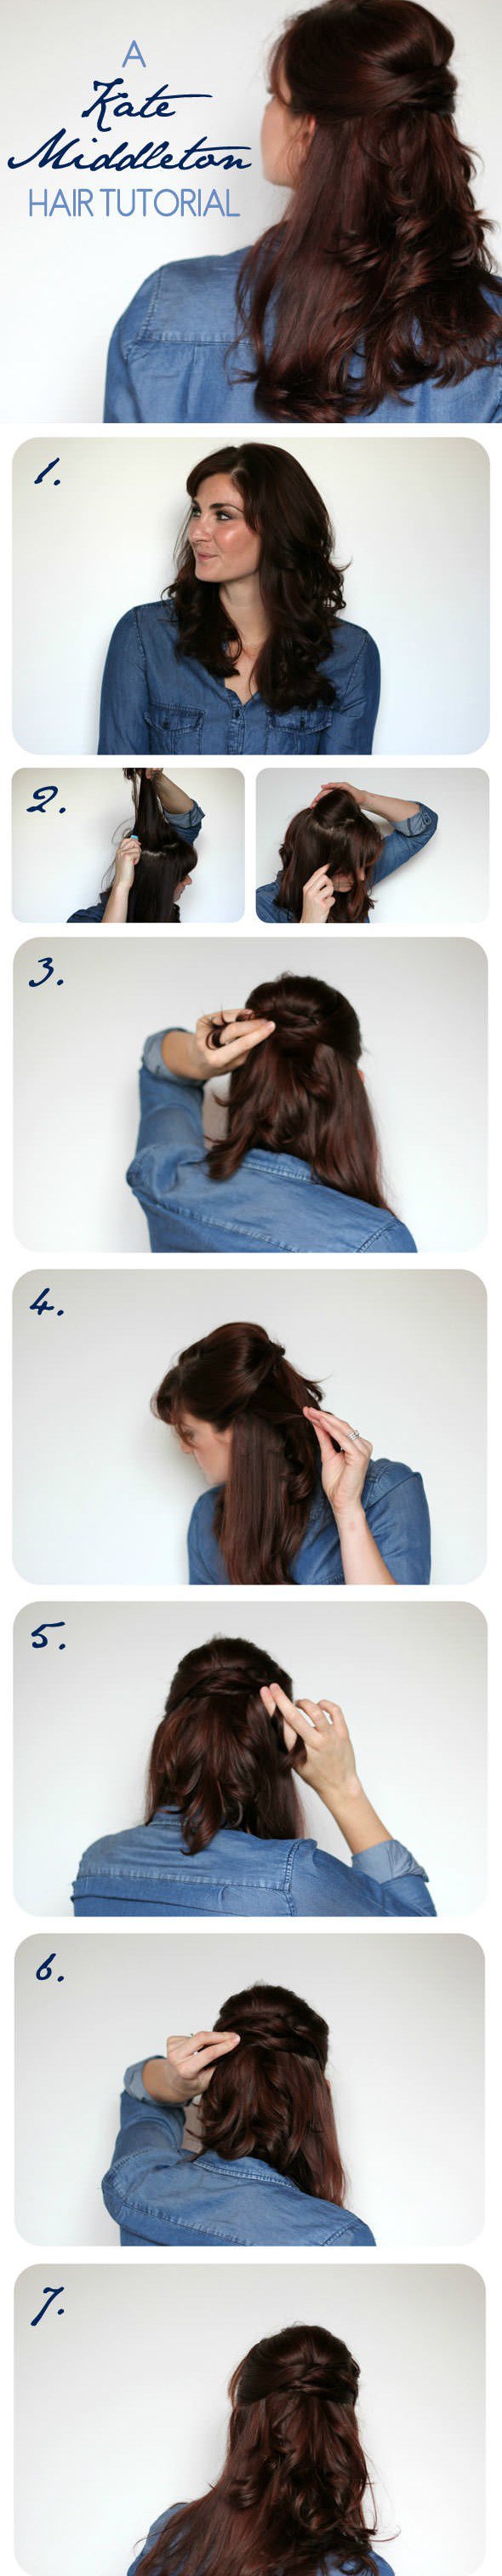 Kate Middleton's hair tutorial